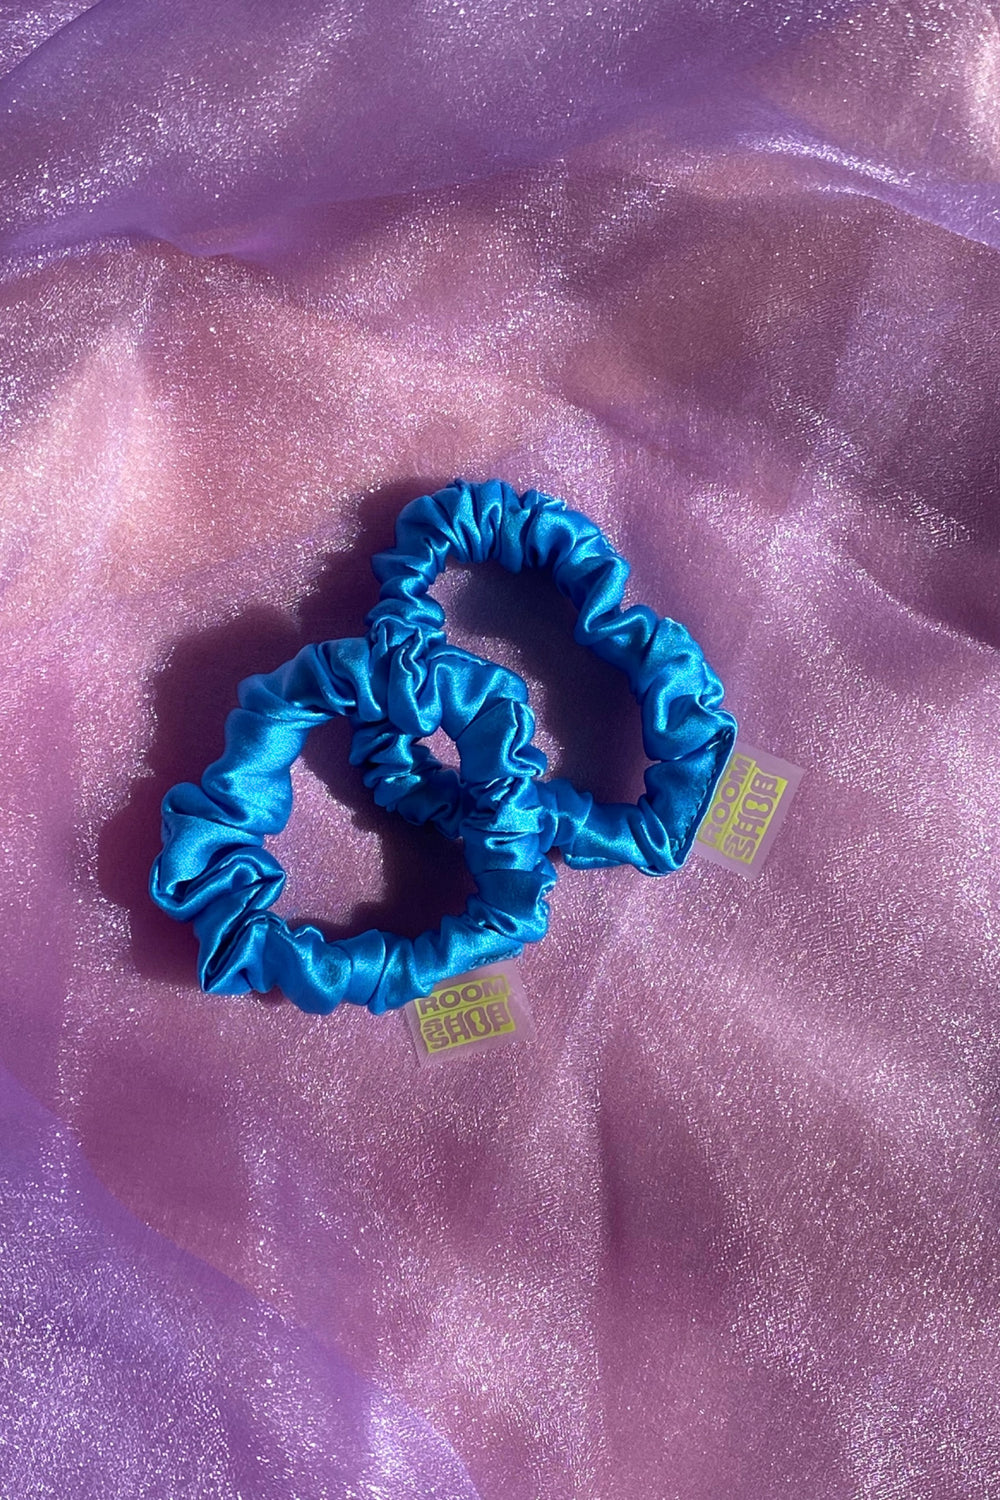 Turquoise Silk Mini Scrunchie Set